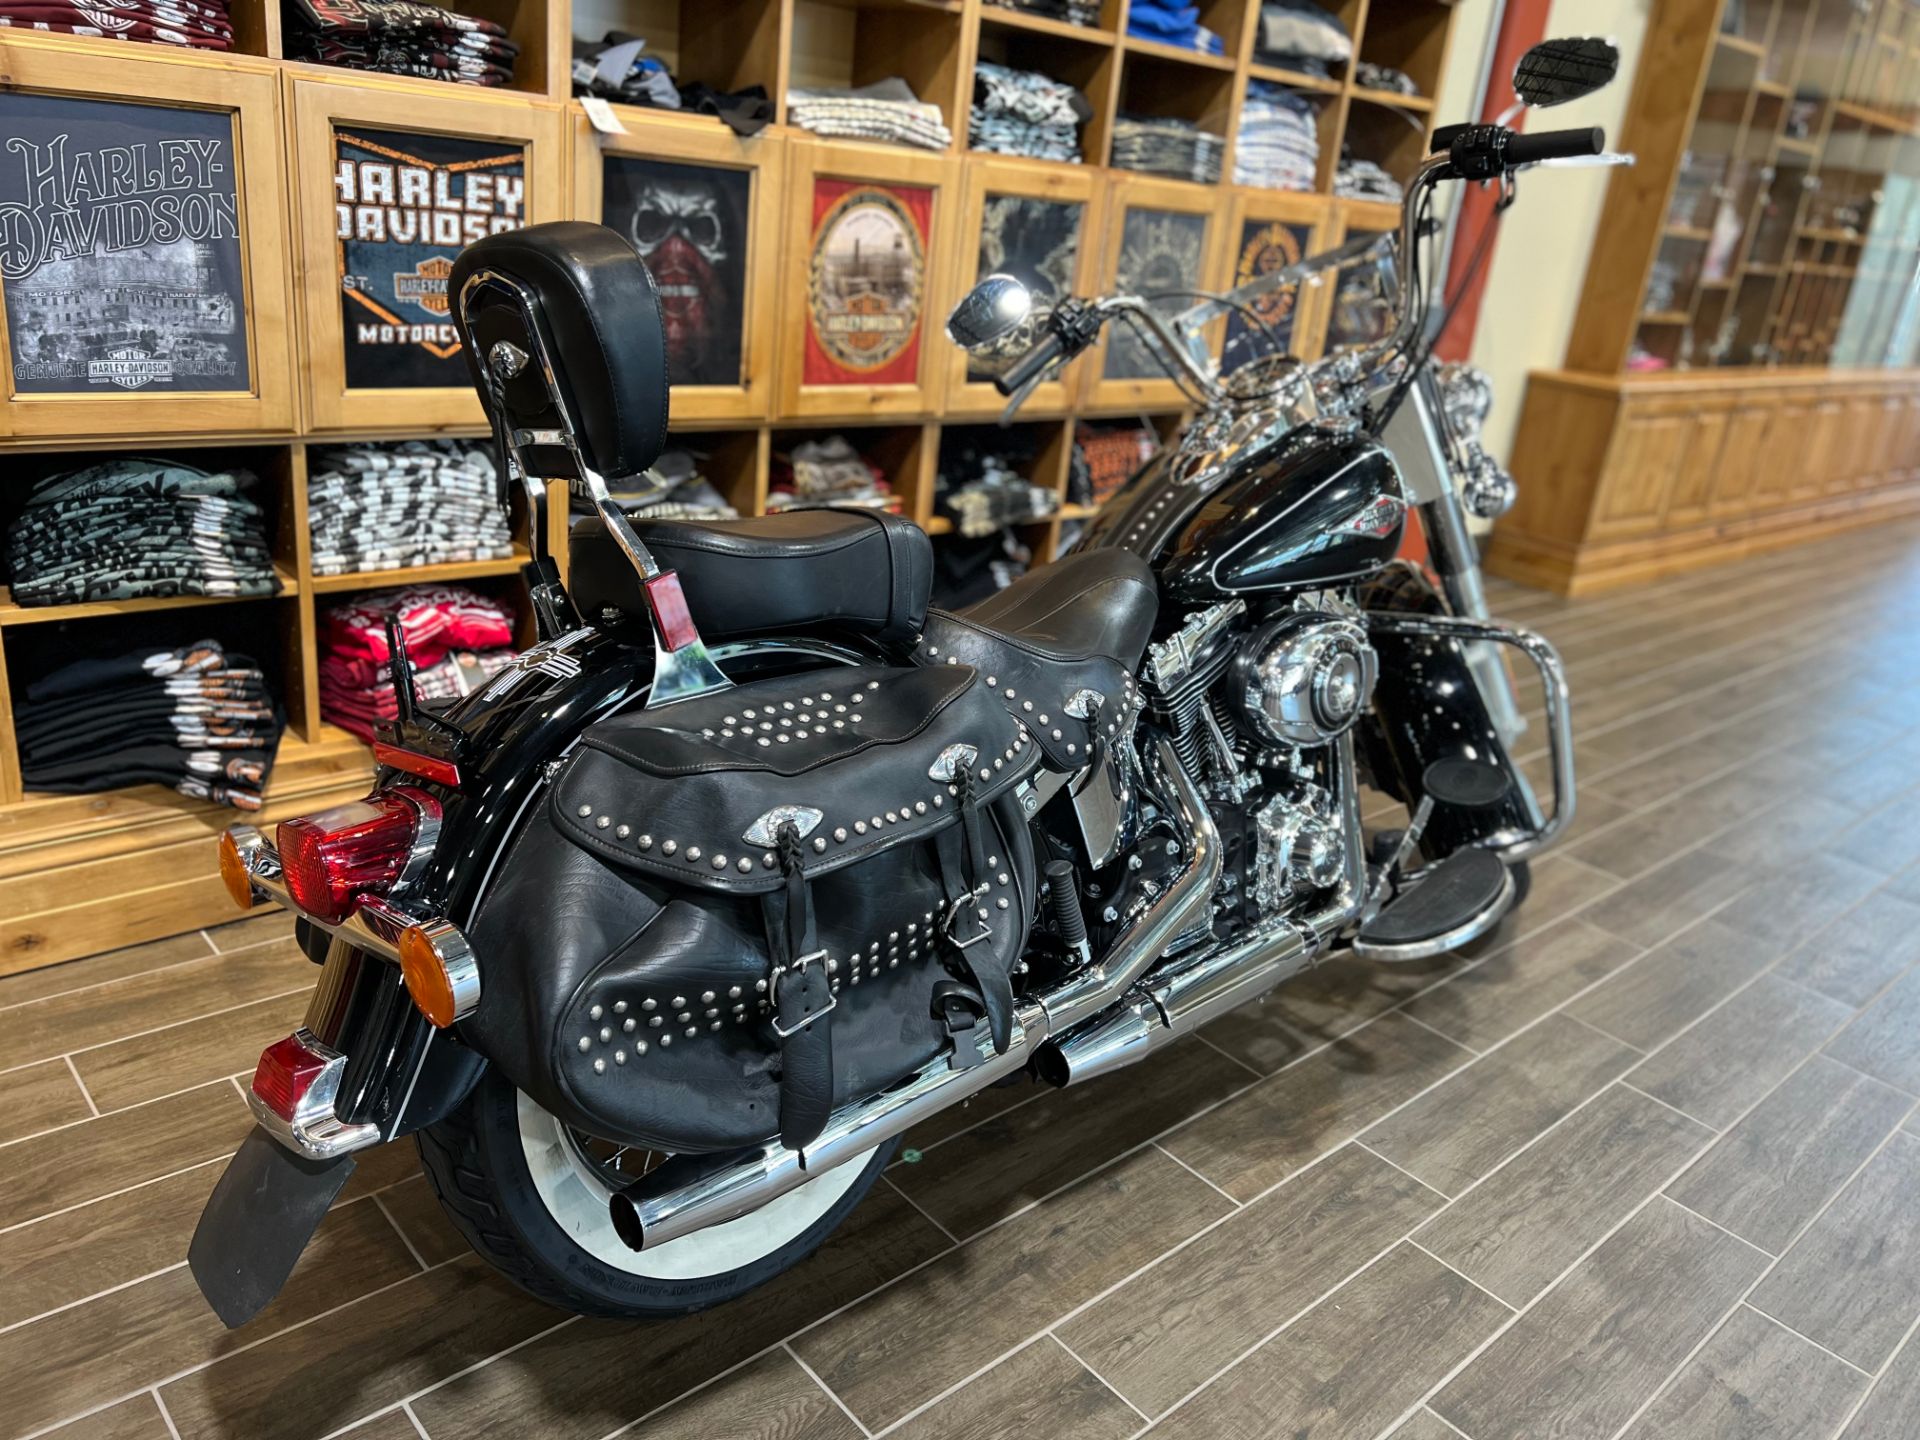 2015 Harley-Davidson Heritage Softail® Classic in Logan, Utah - Photo 3